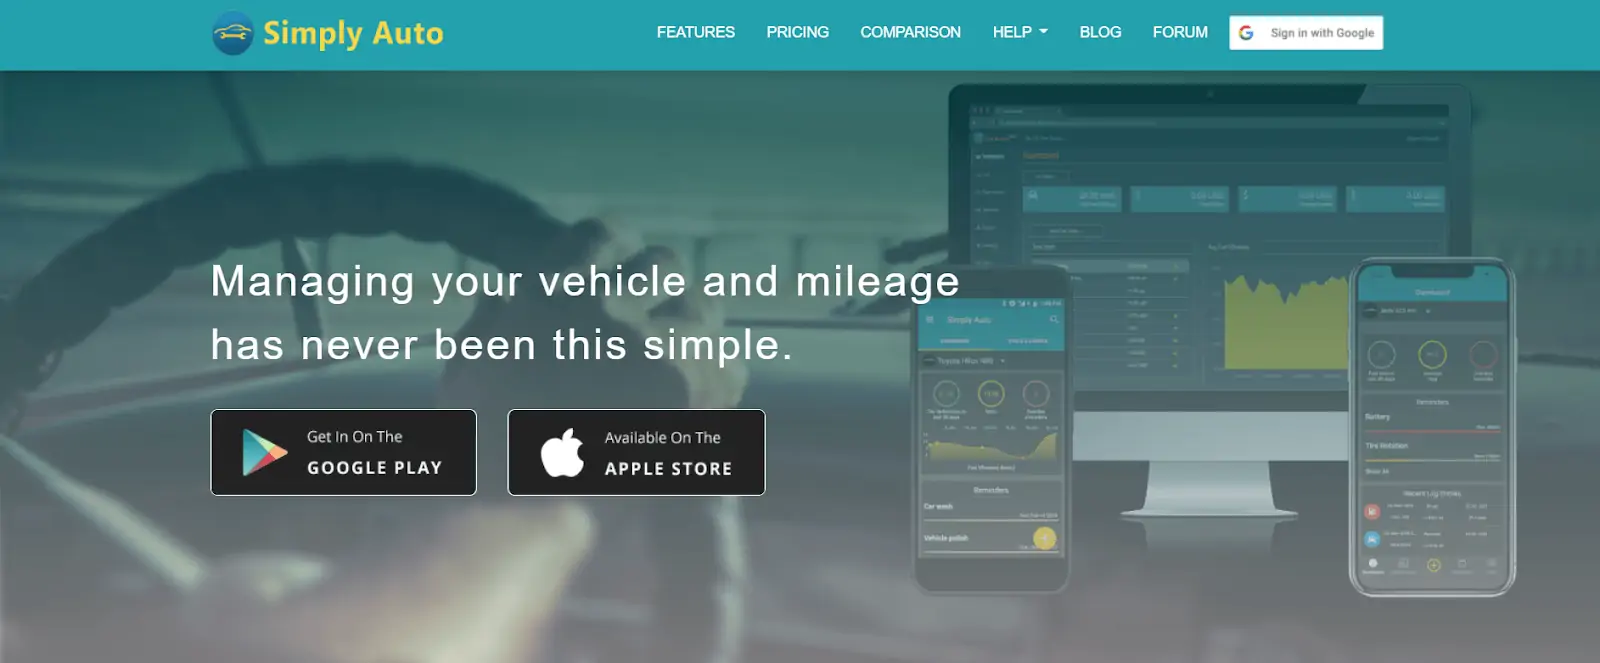 Simply Auto car maintenance app screenshot